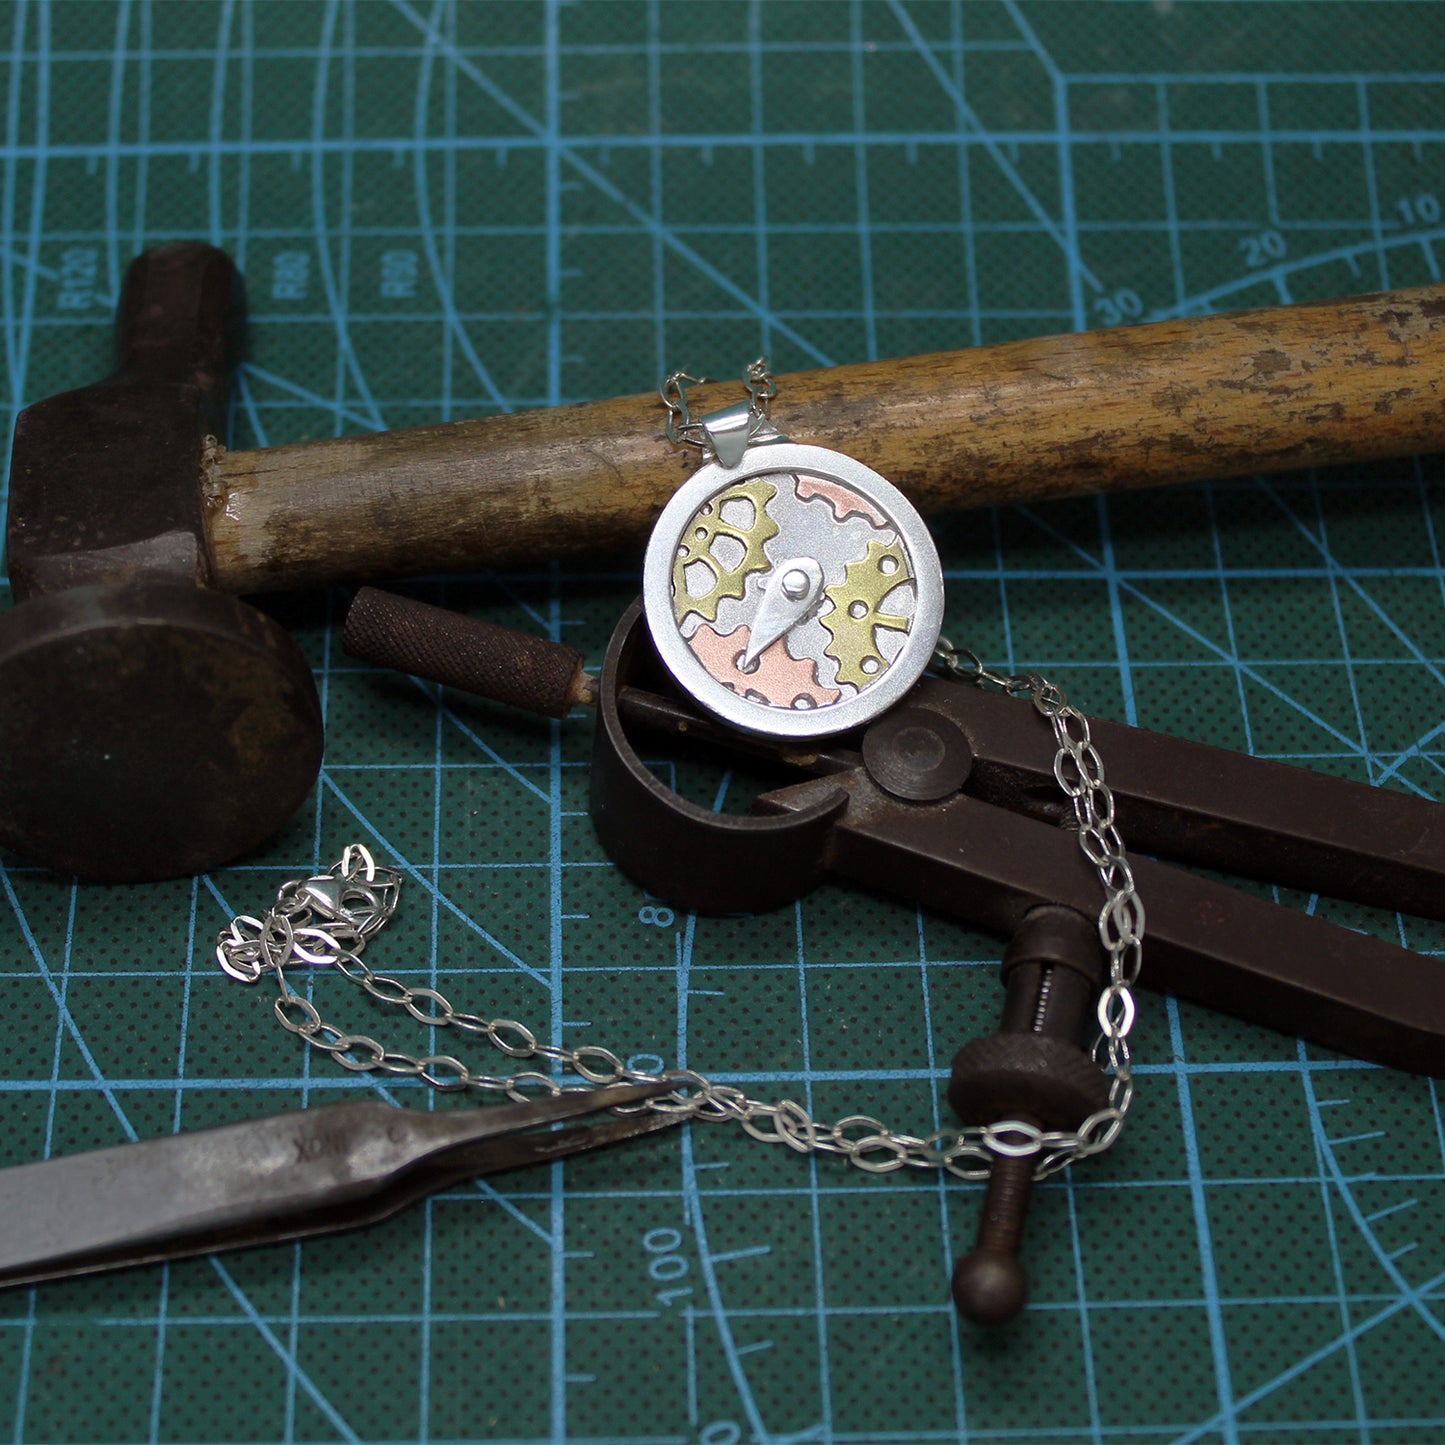 Fairy Compass pendant in 925 silver, brass and copper